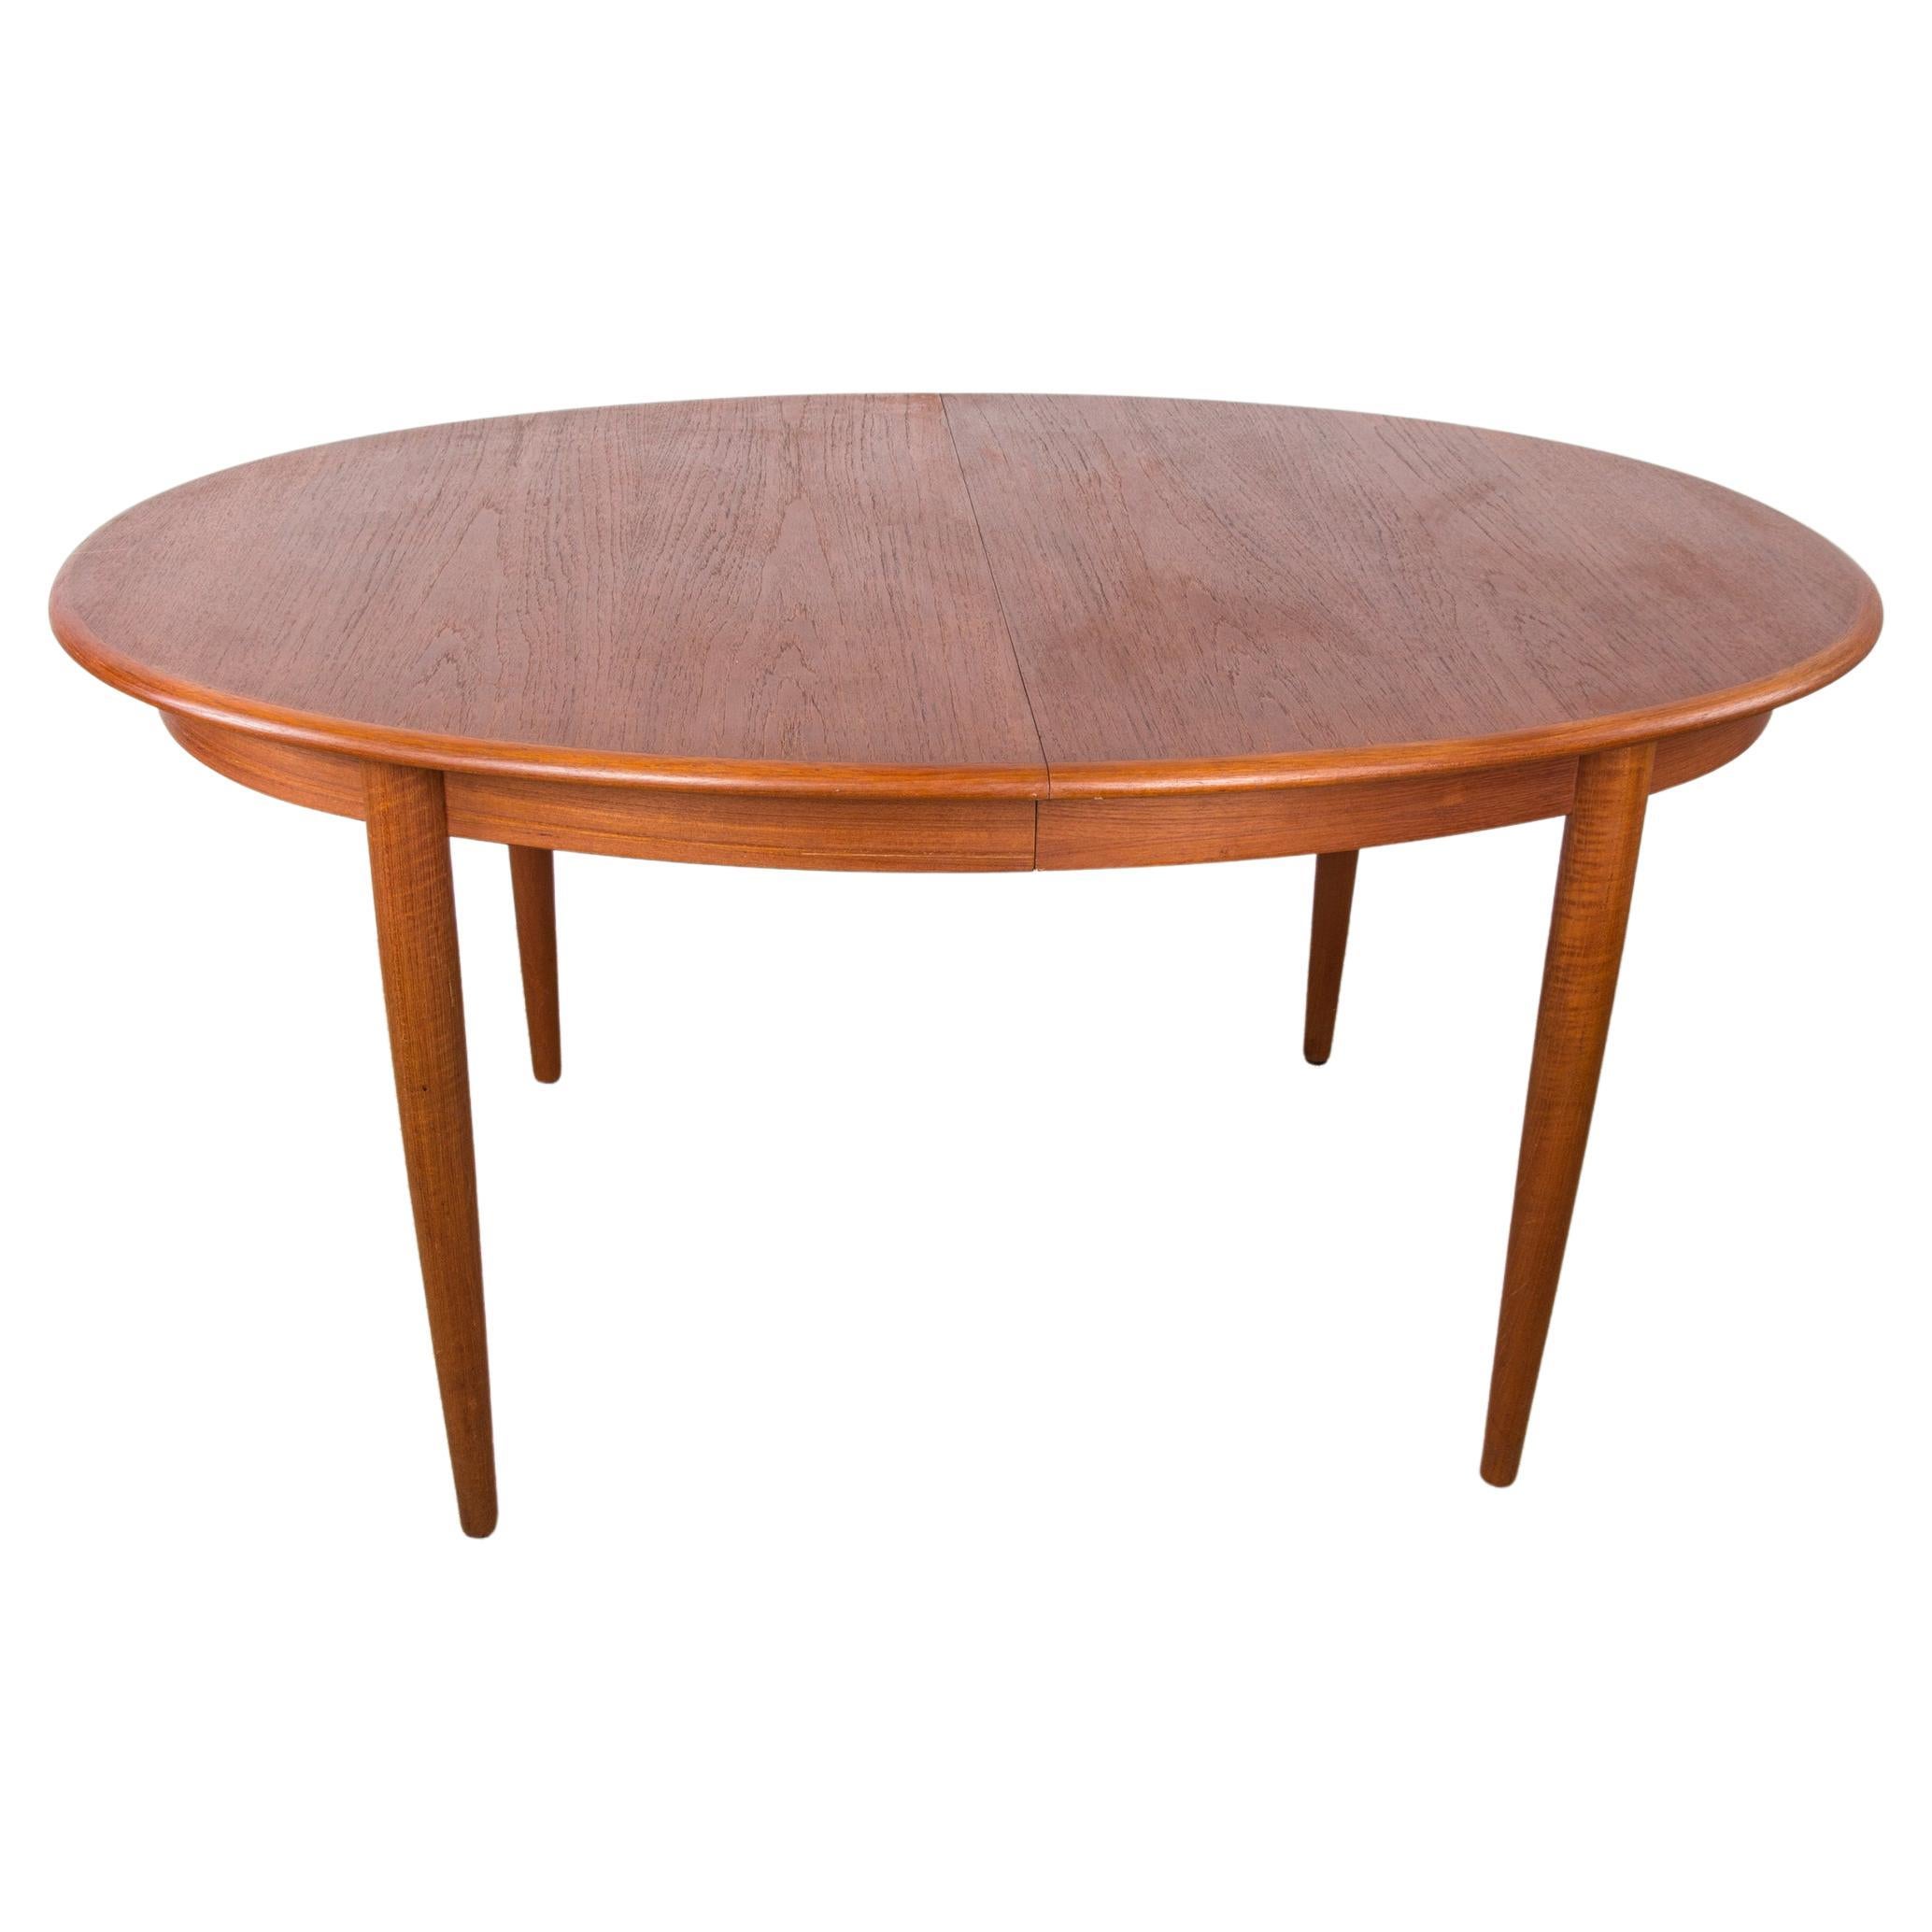 Danish oval teak dining table by Gudme Mobelfabrik 1960. For Sale